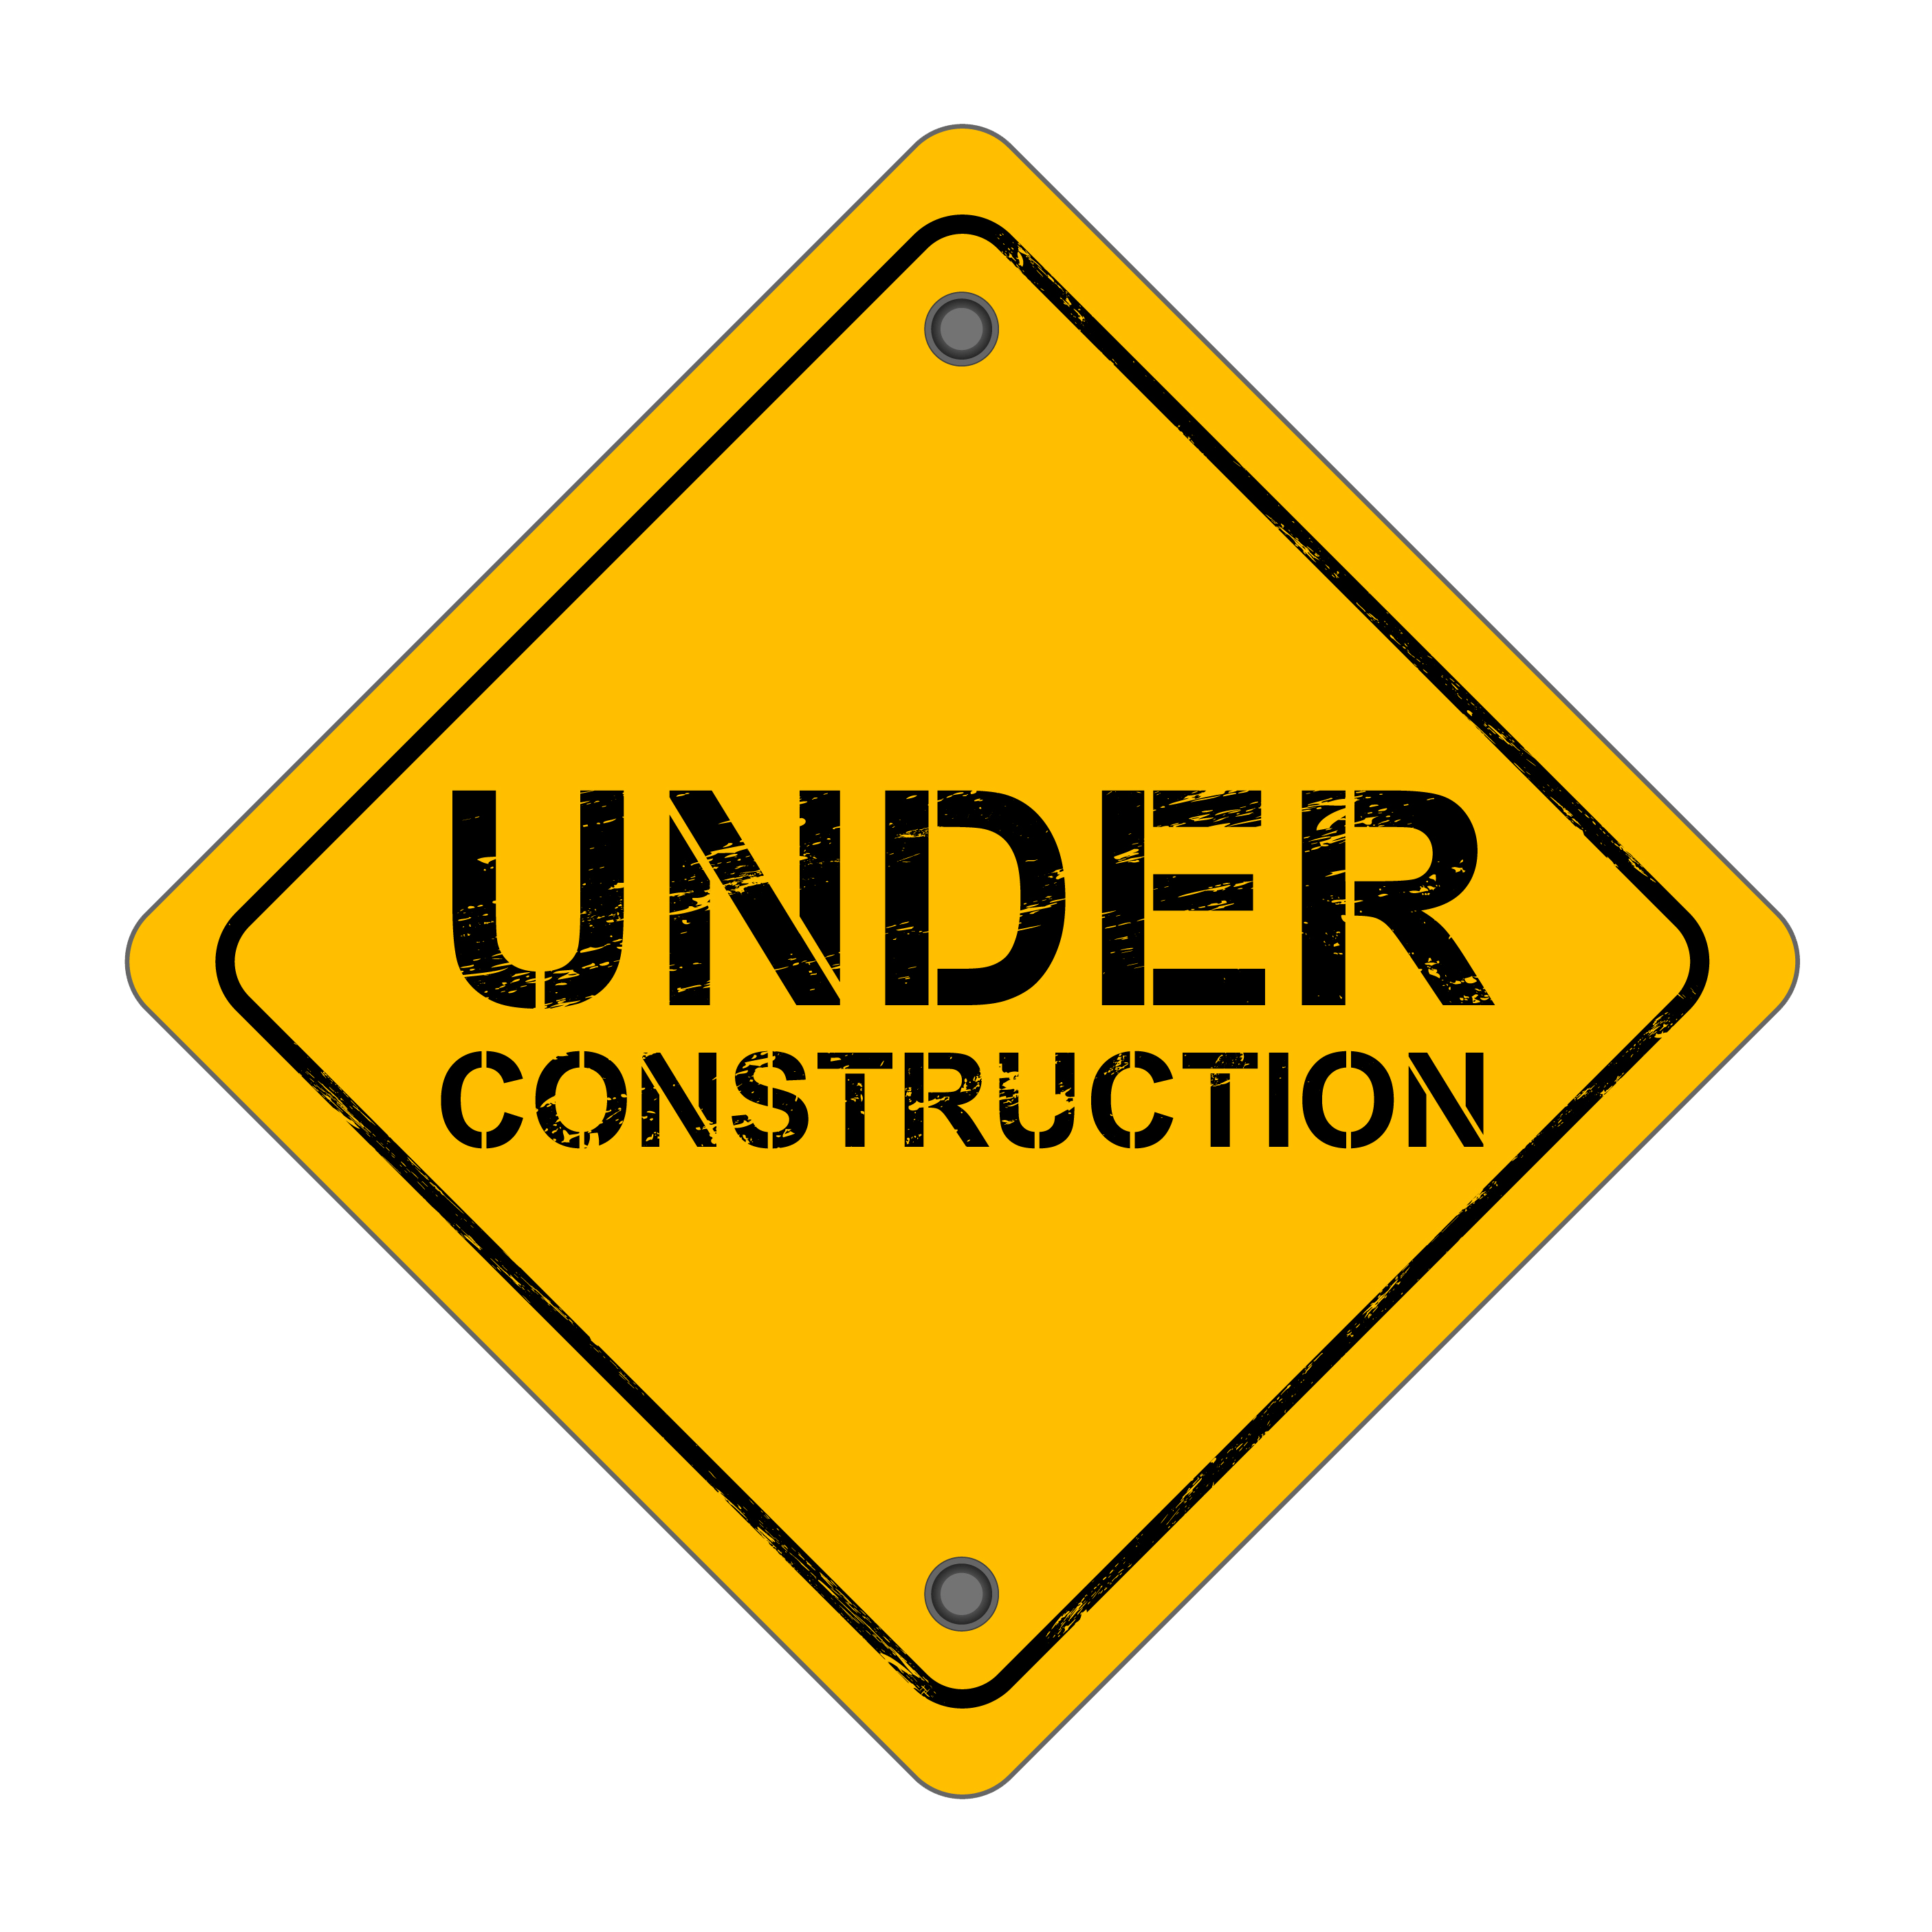 Under Construction Logo - Under construction PNG images label free download